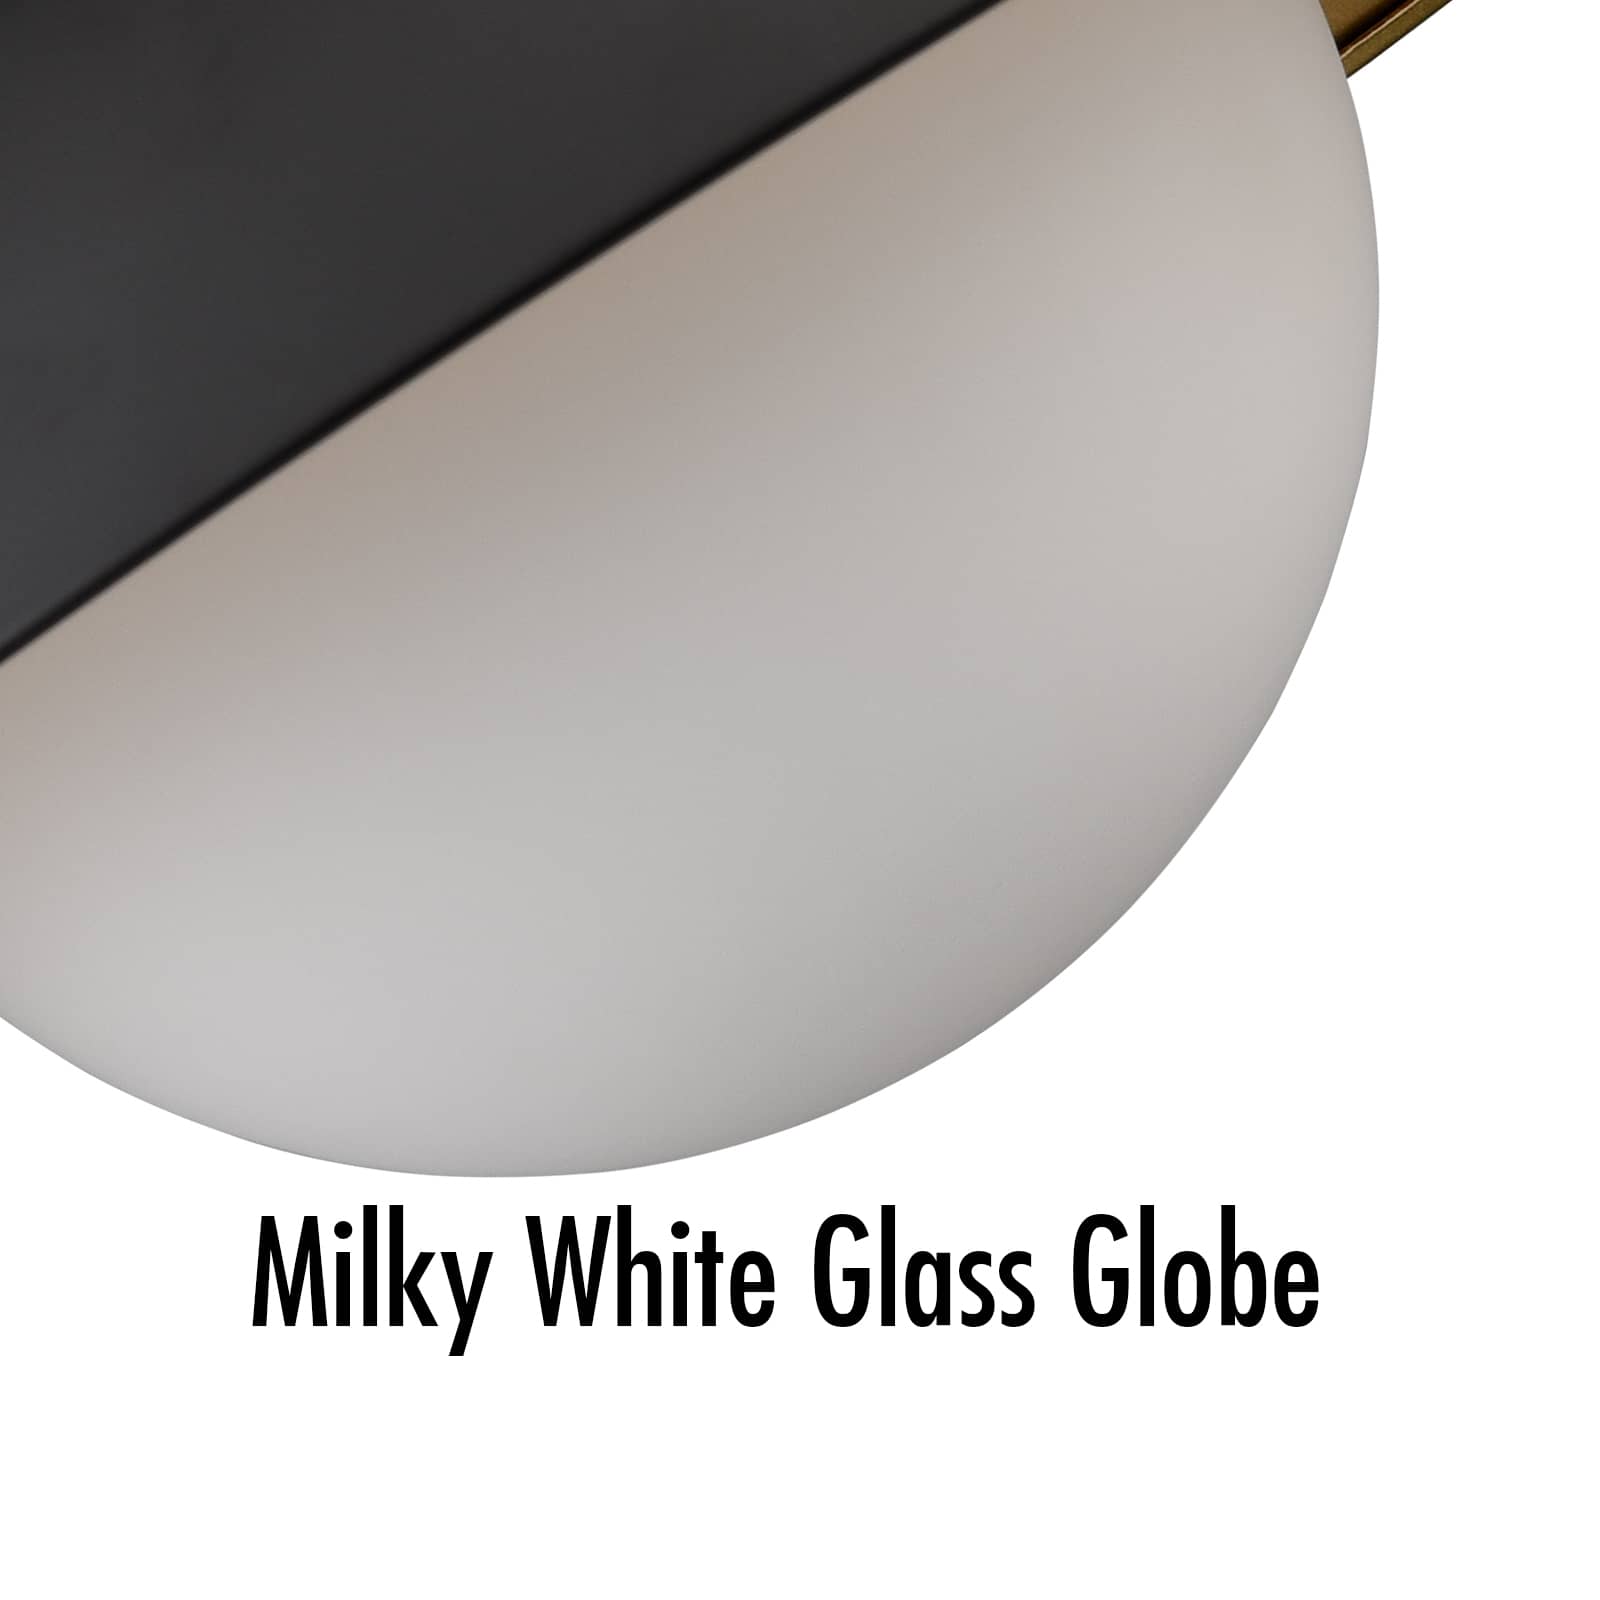 Industrial Matte Black Flush Mount Ceiling Light with Glass Globe